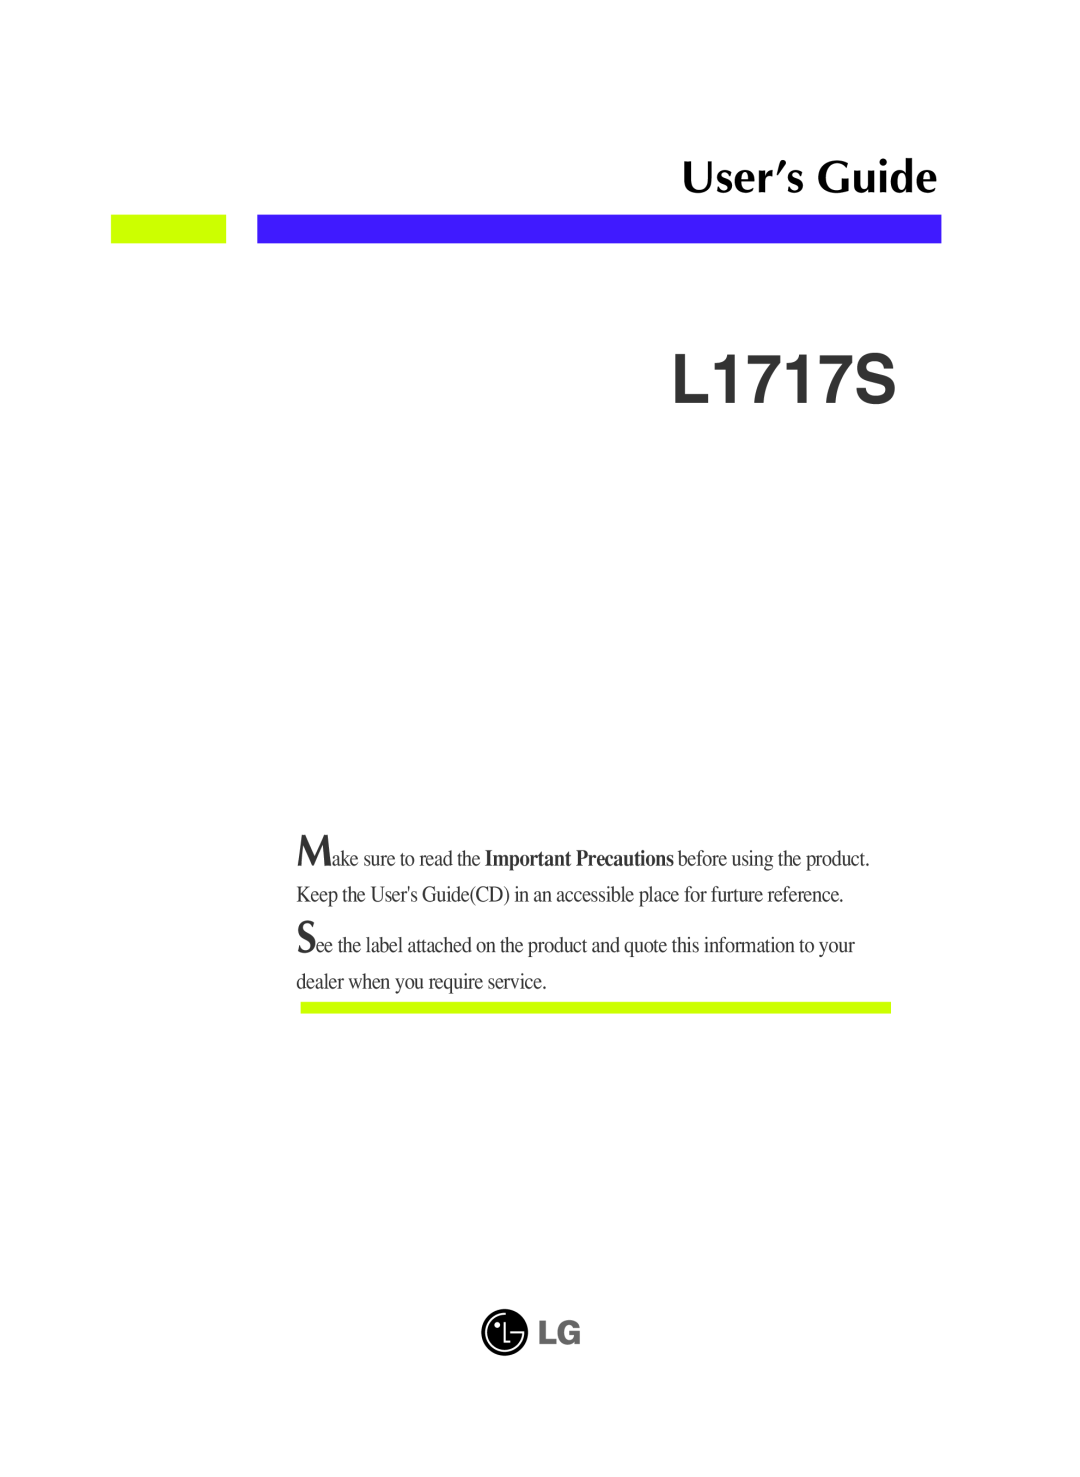 LG Electronics L1717S manual User’s Guide 